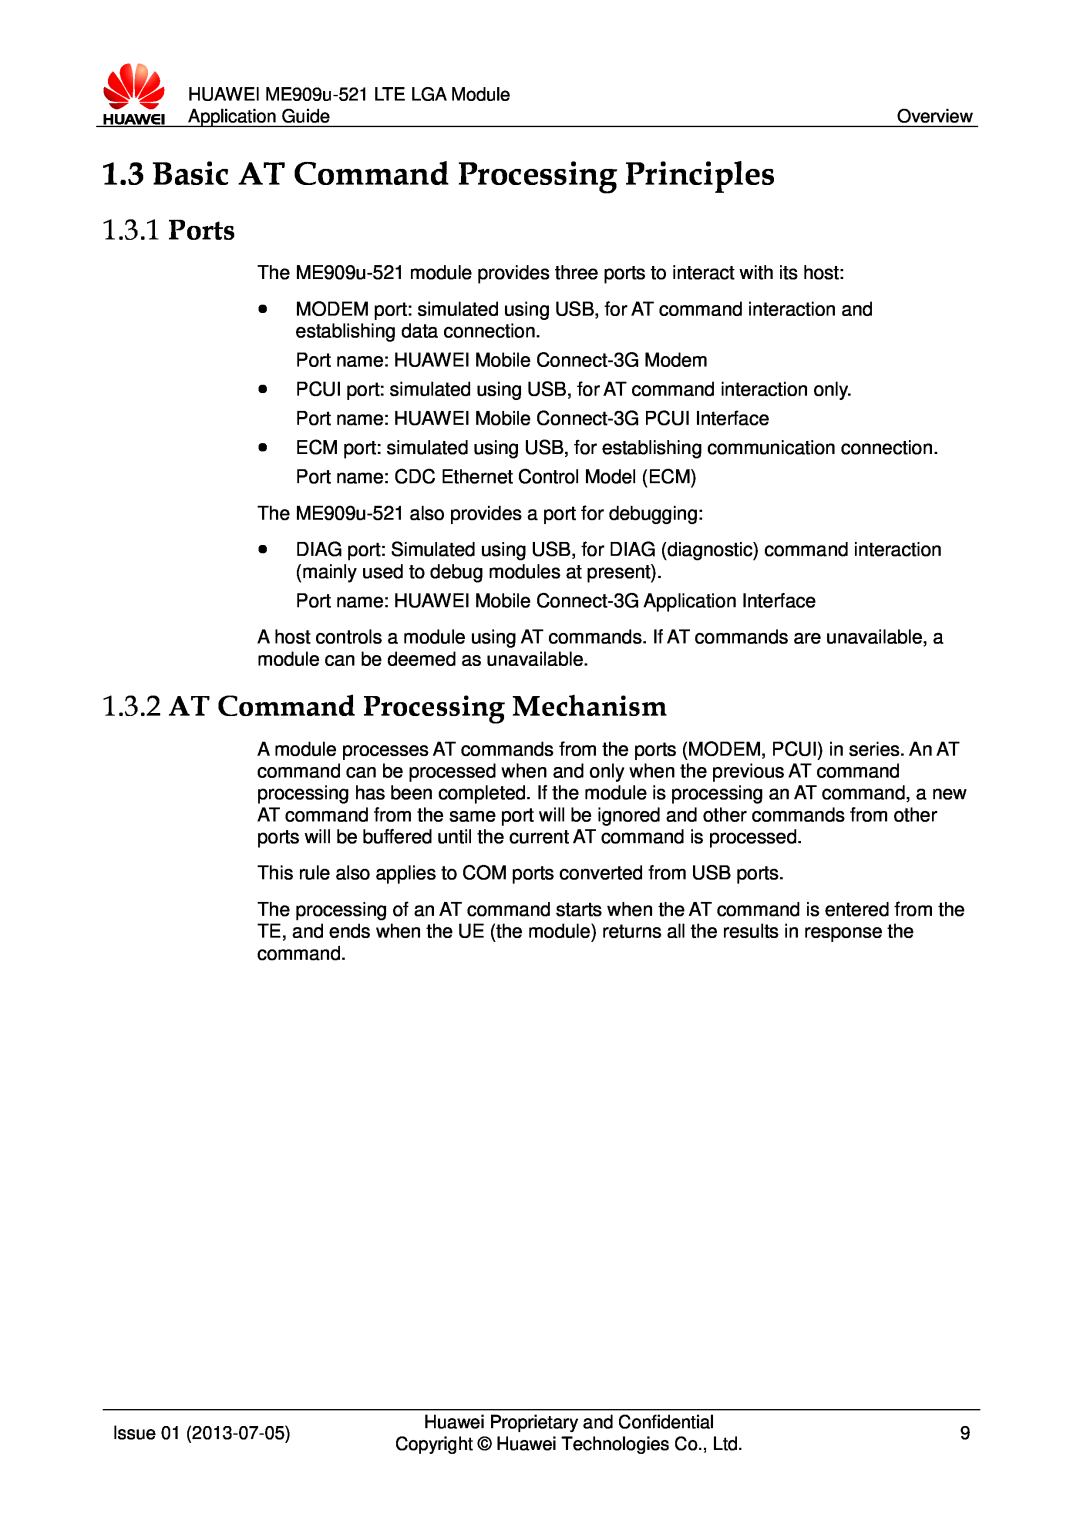 Huawei ME909u-521 manual Basic AT Command Processing Principles, Ports, AT Command Processing Mechanism 